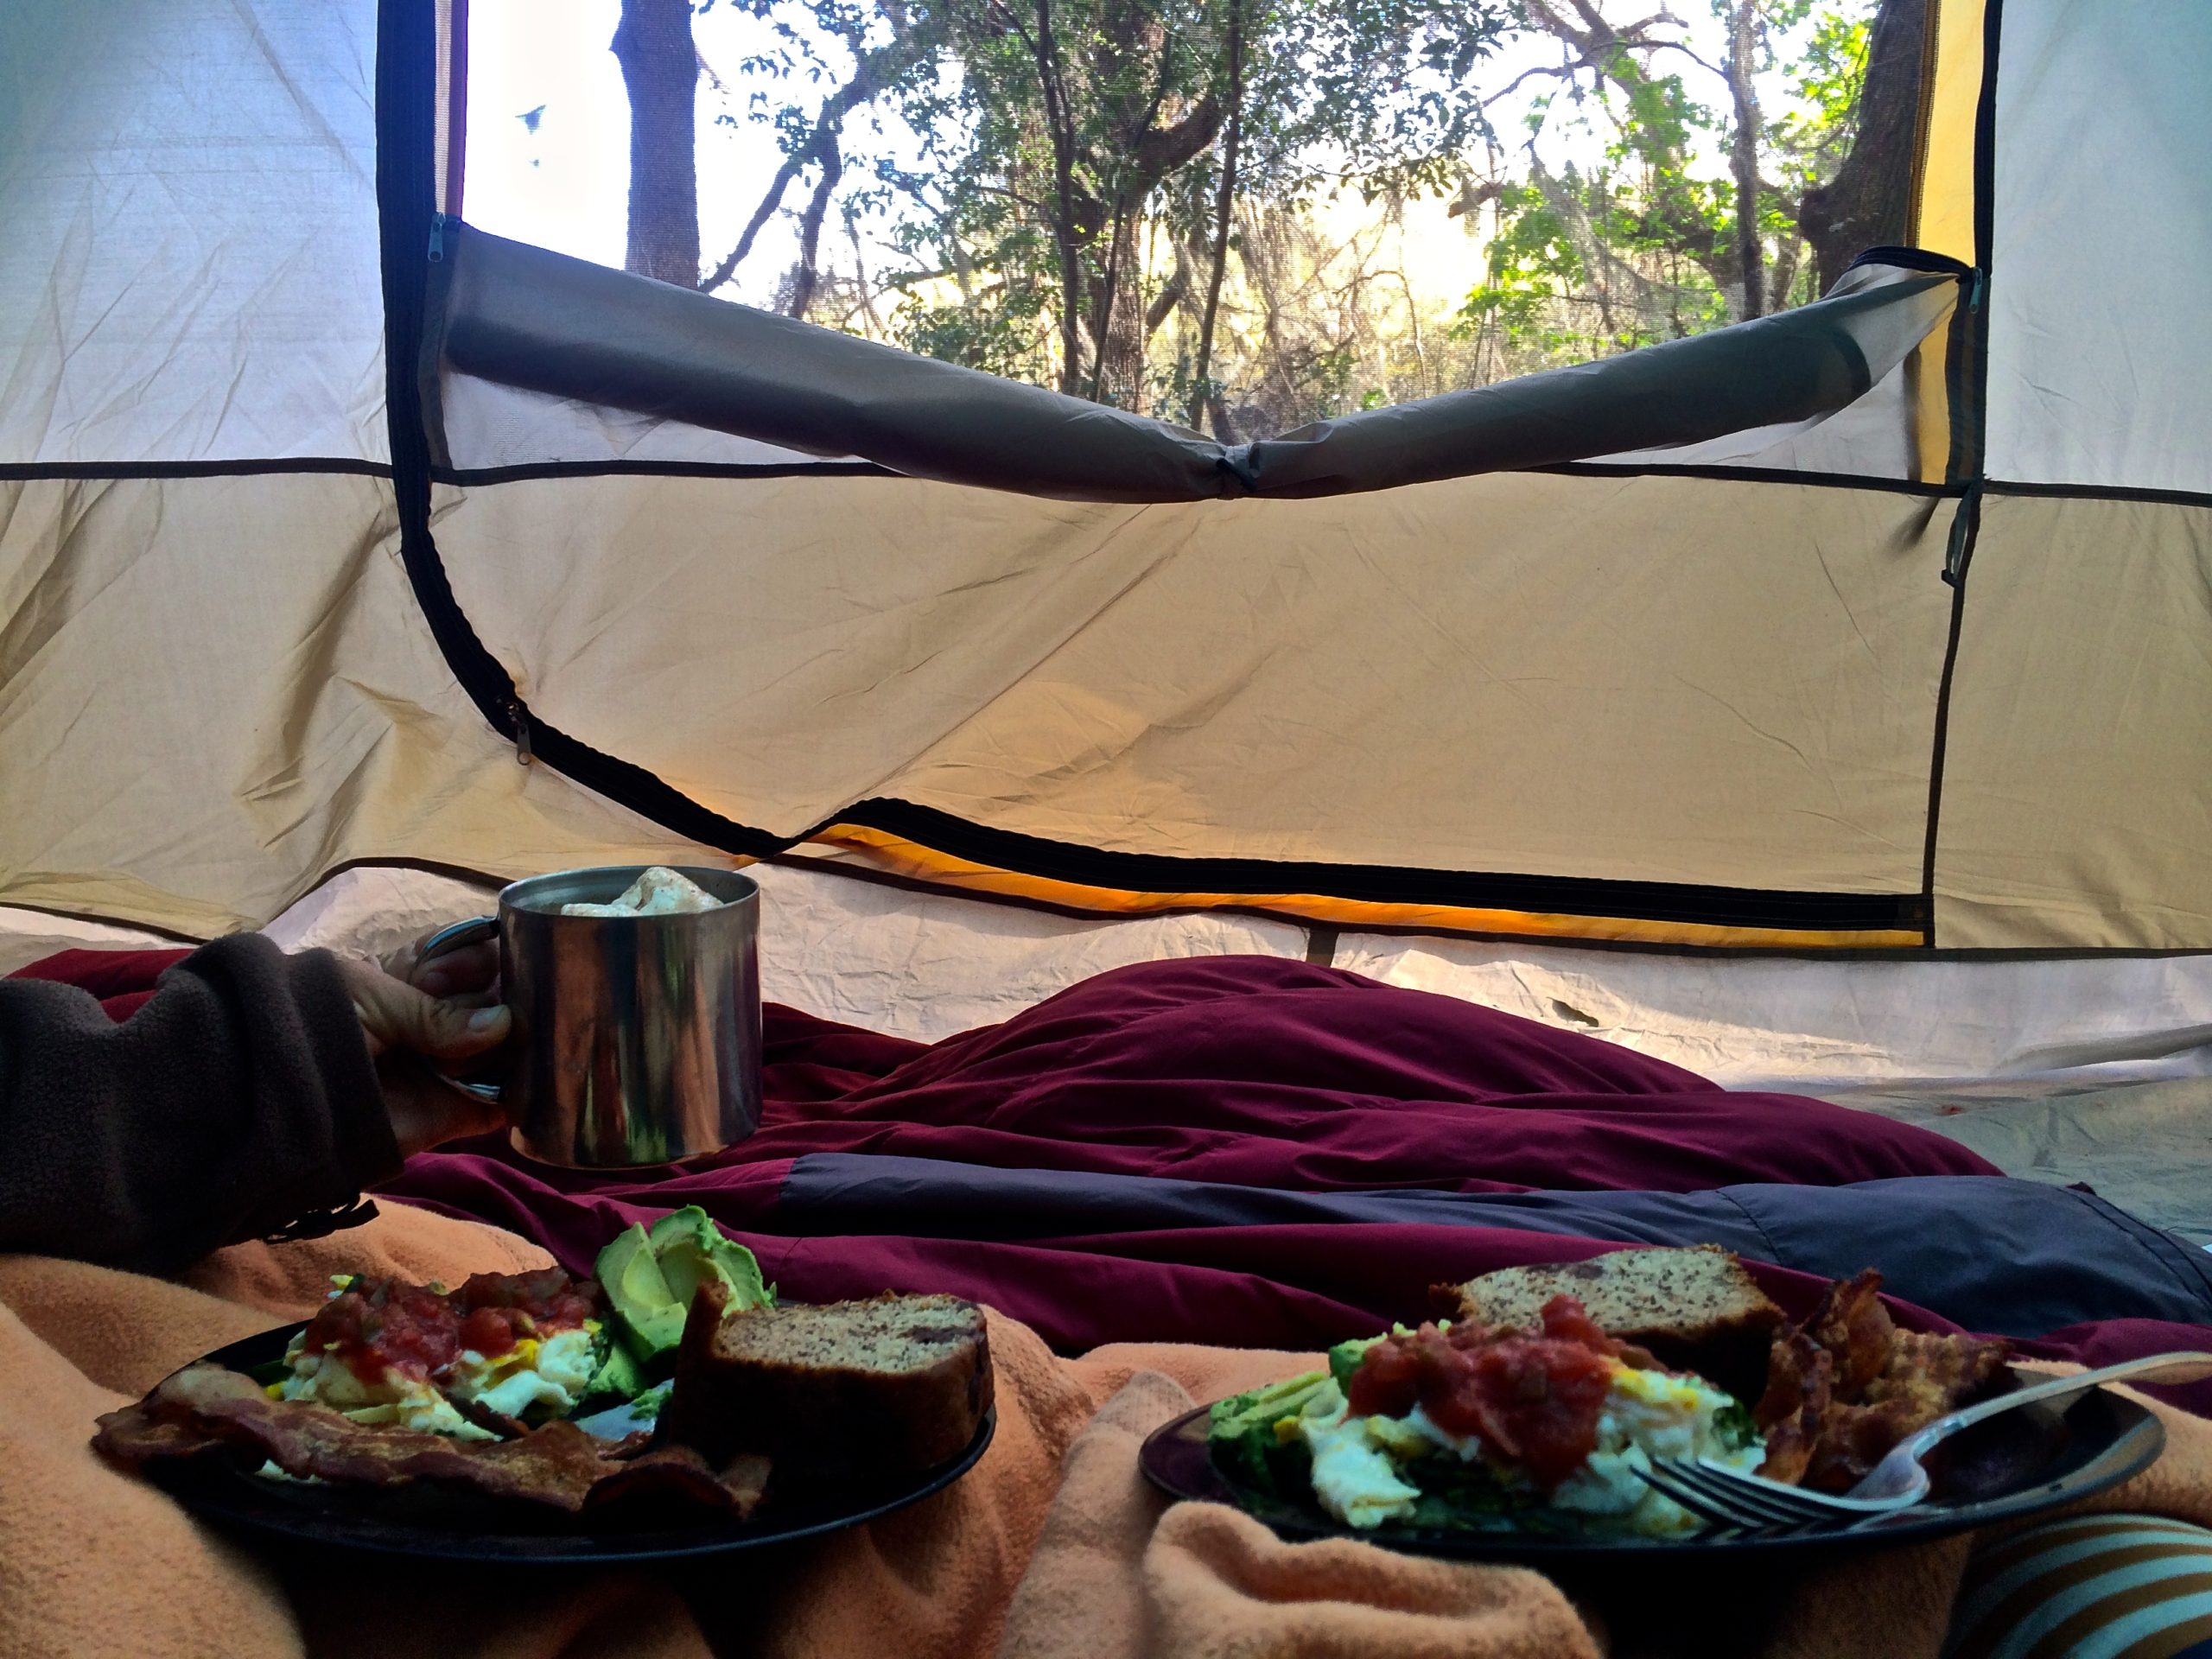 Breakfast In Bed. In A Tent